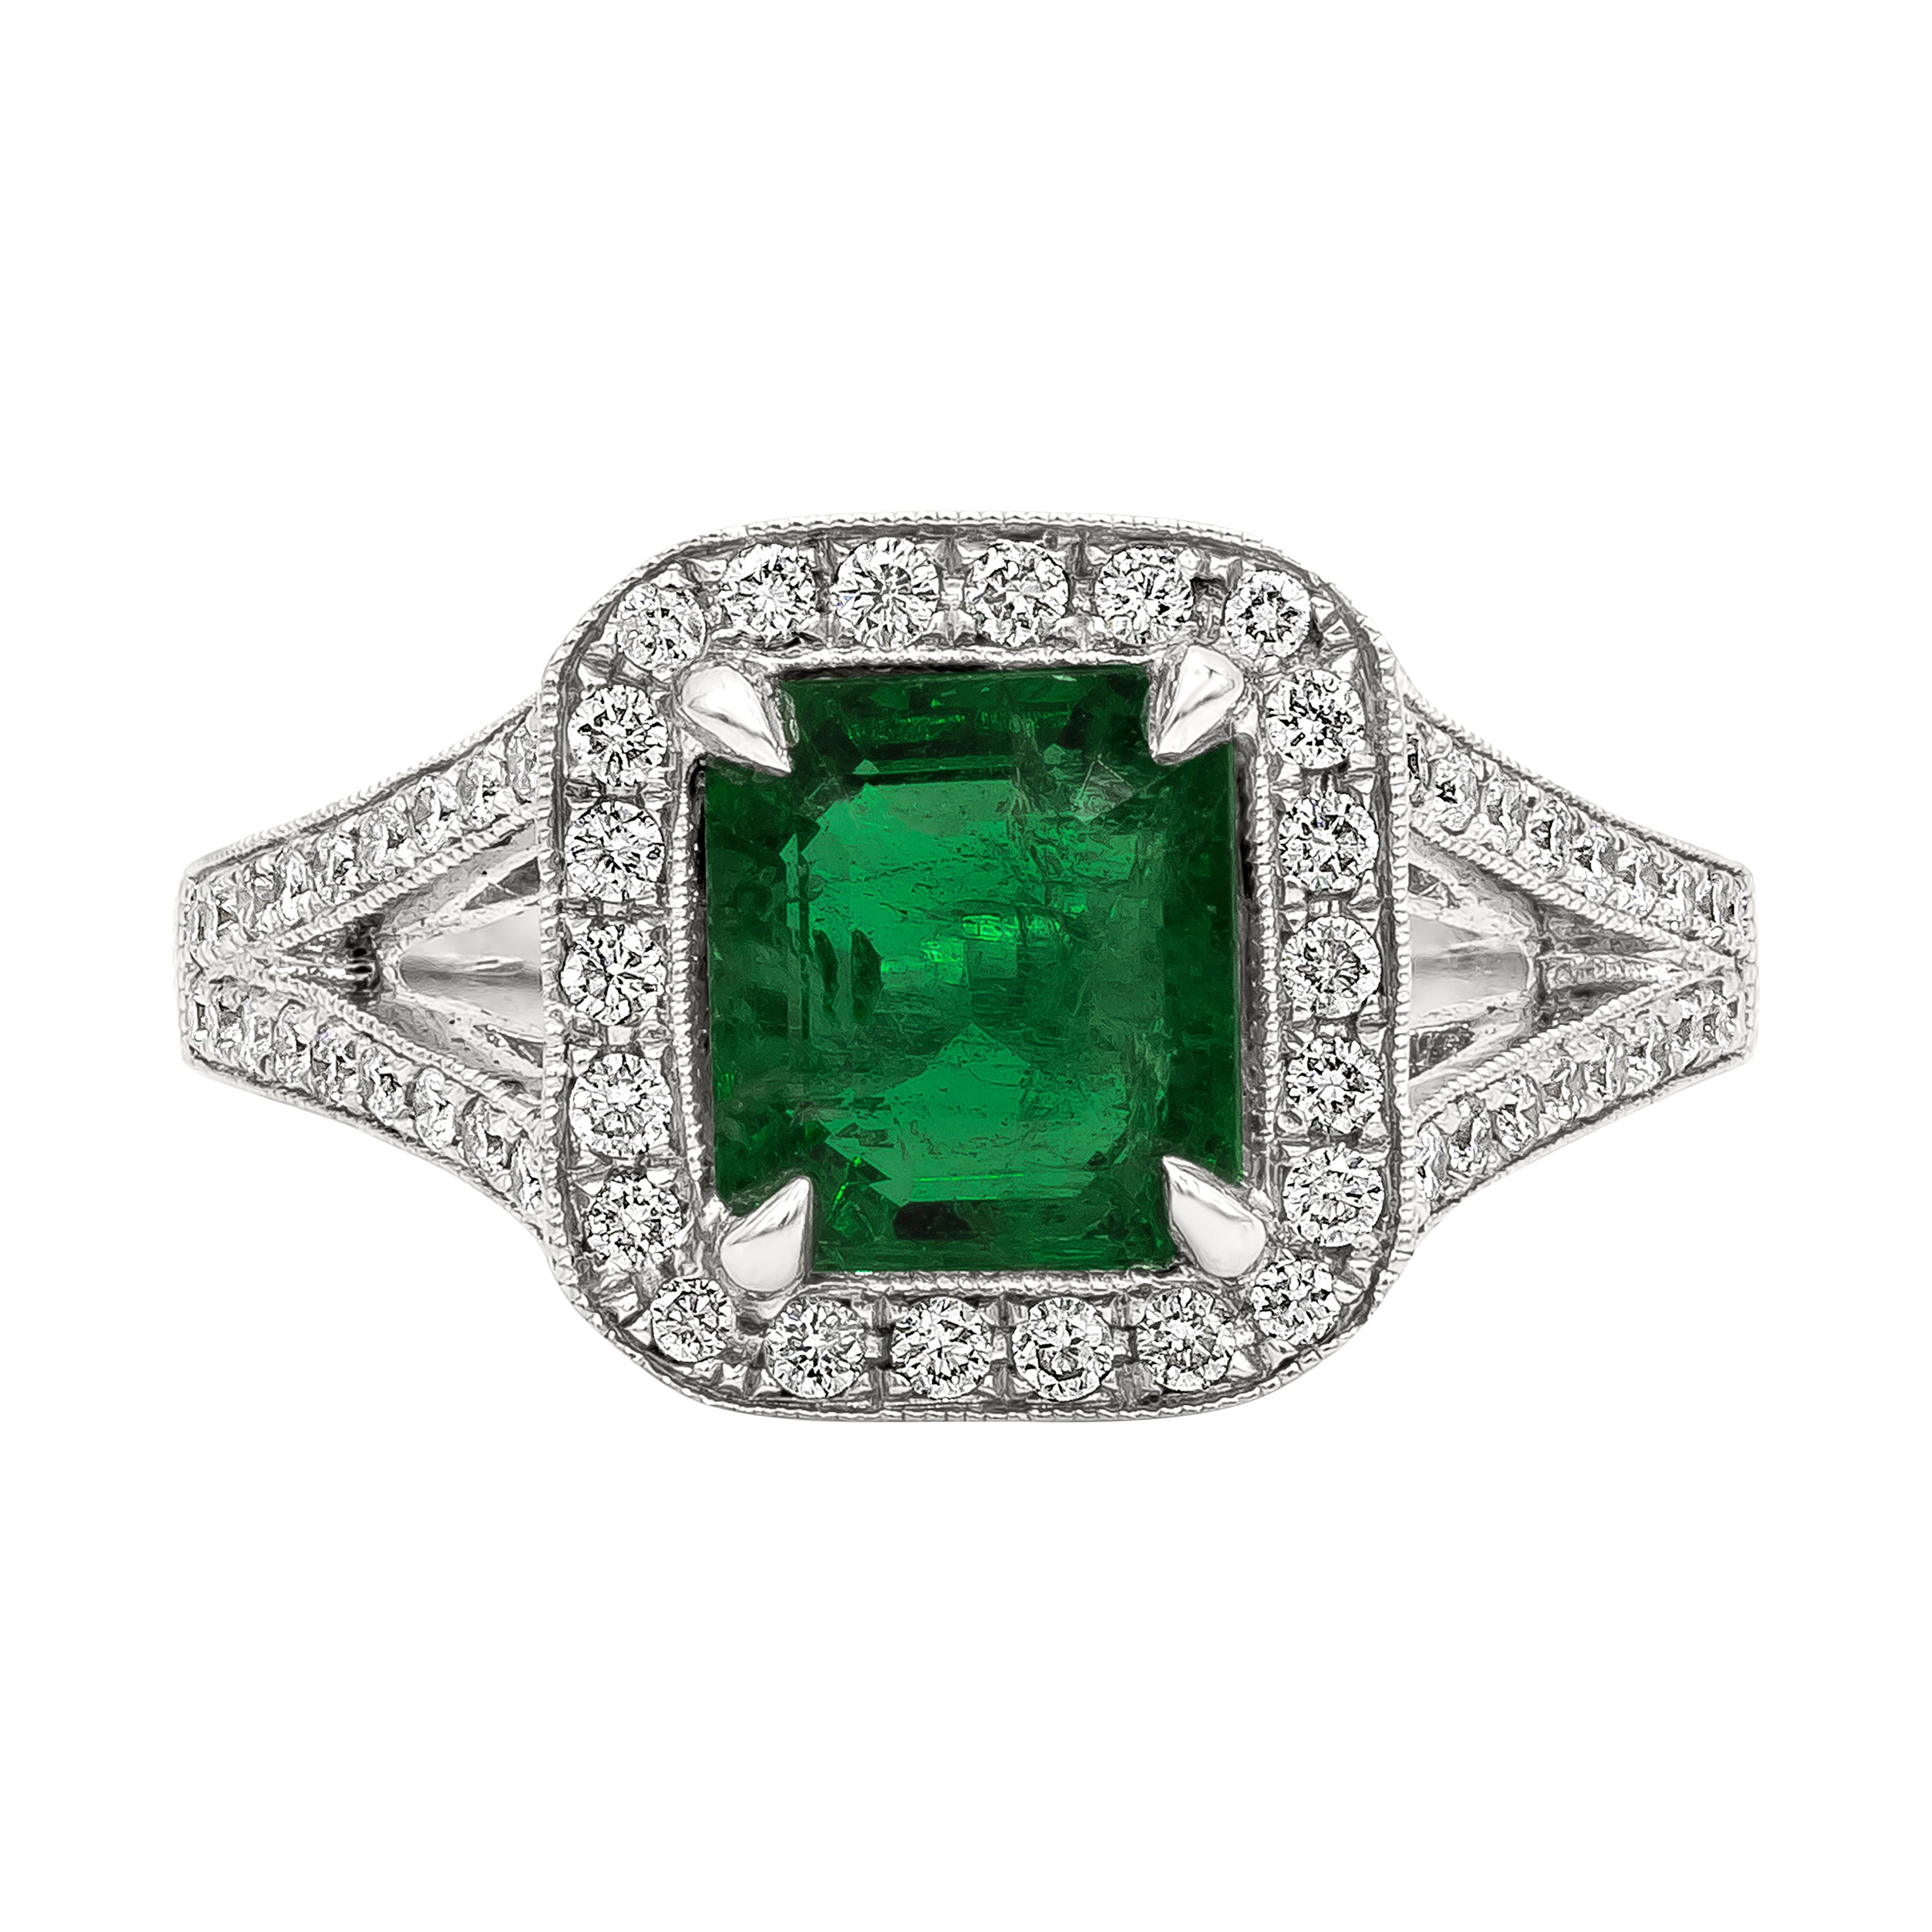 Roman Malakov 1.68 Carats Emerald Cut Emerald with Diamond Halo Engagement Ring